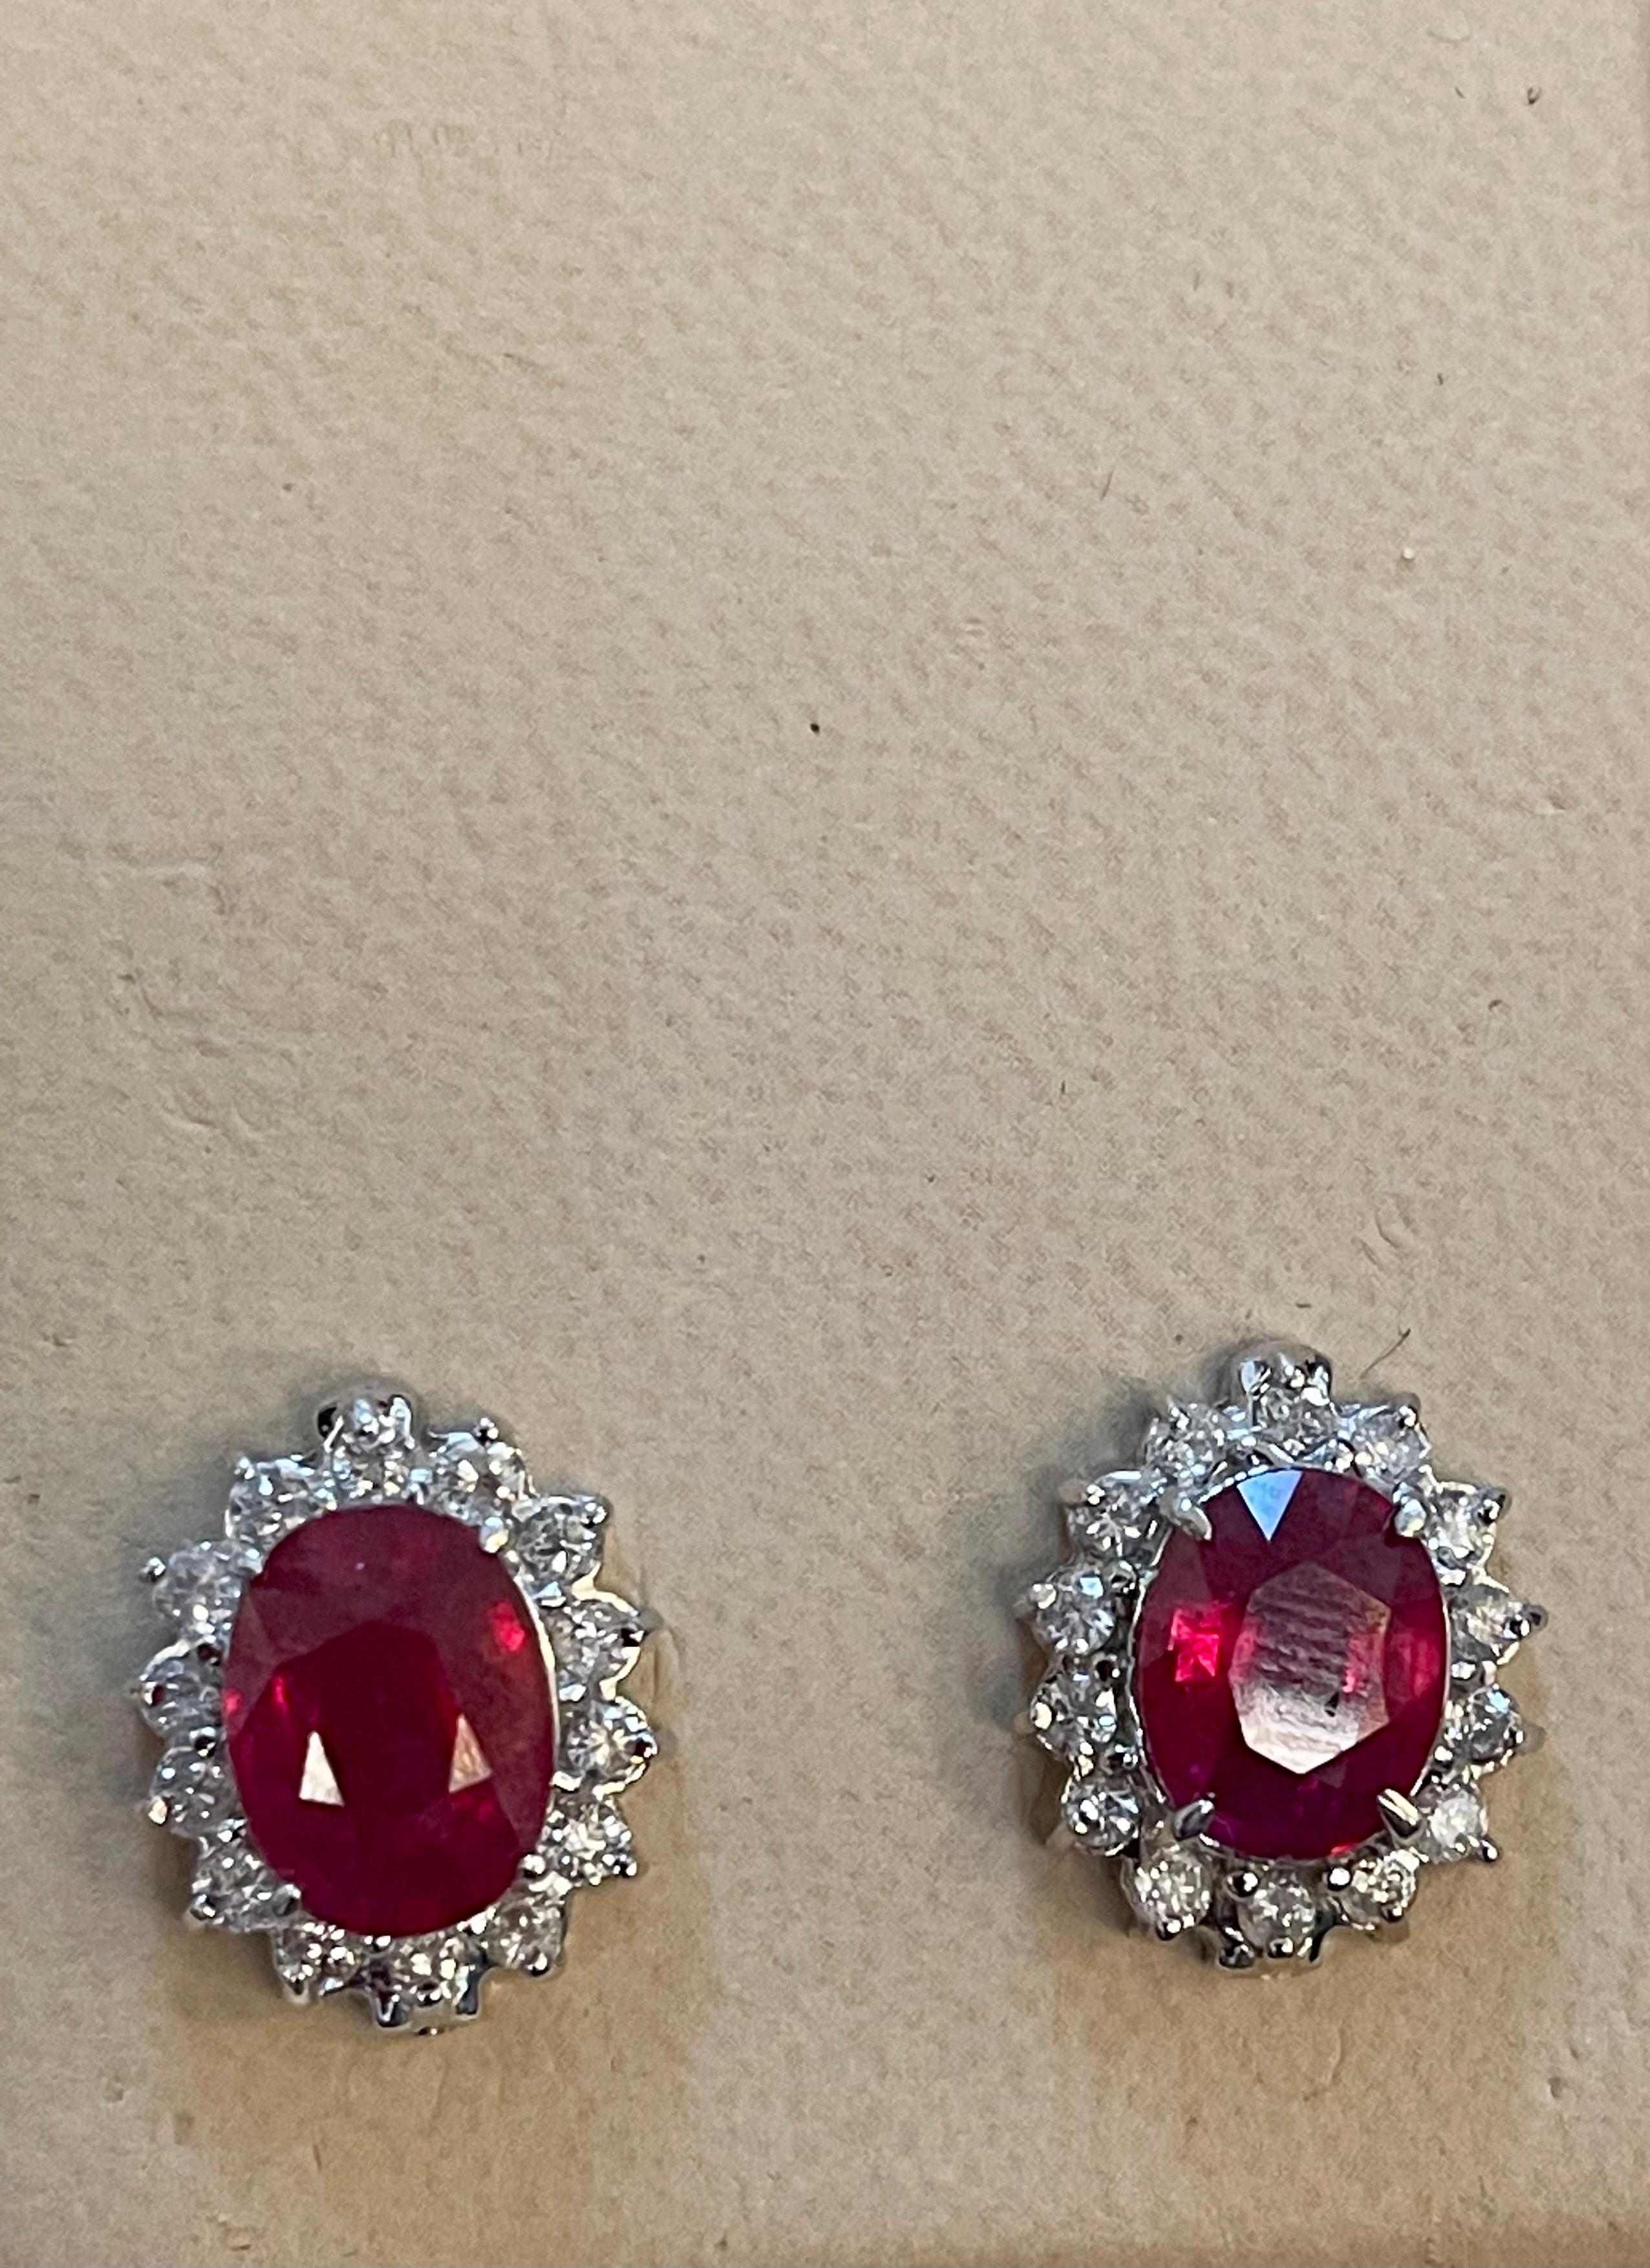 6 Carat Oval Treated Ruby & 1.2 Ct Diamond Stud Earrings 14 Karat White Gold For Sale 3